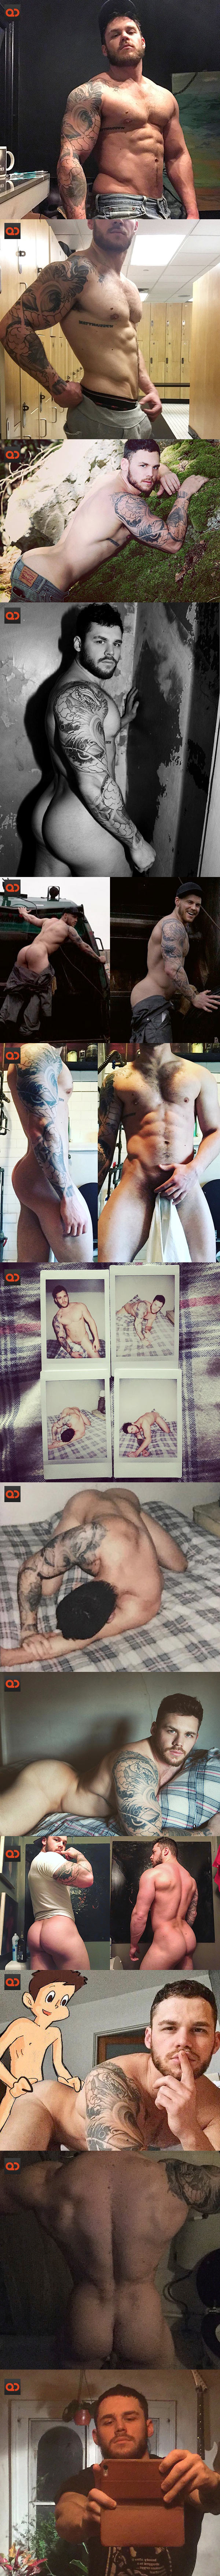 Matthew Camp, Instagram Model, Fully Naked In Leaked Pics!